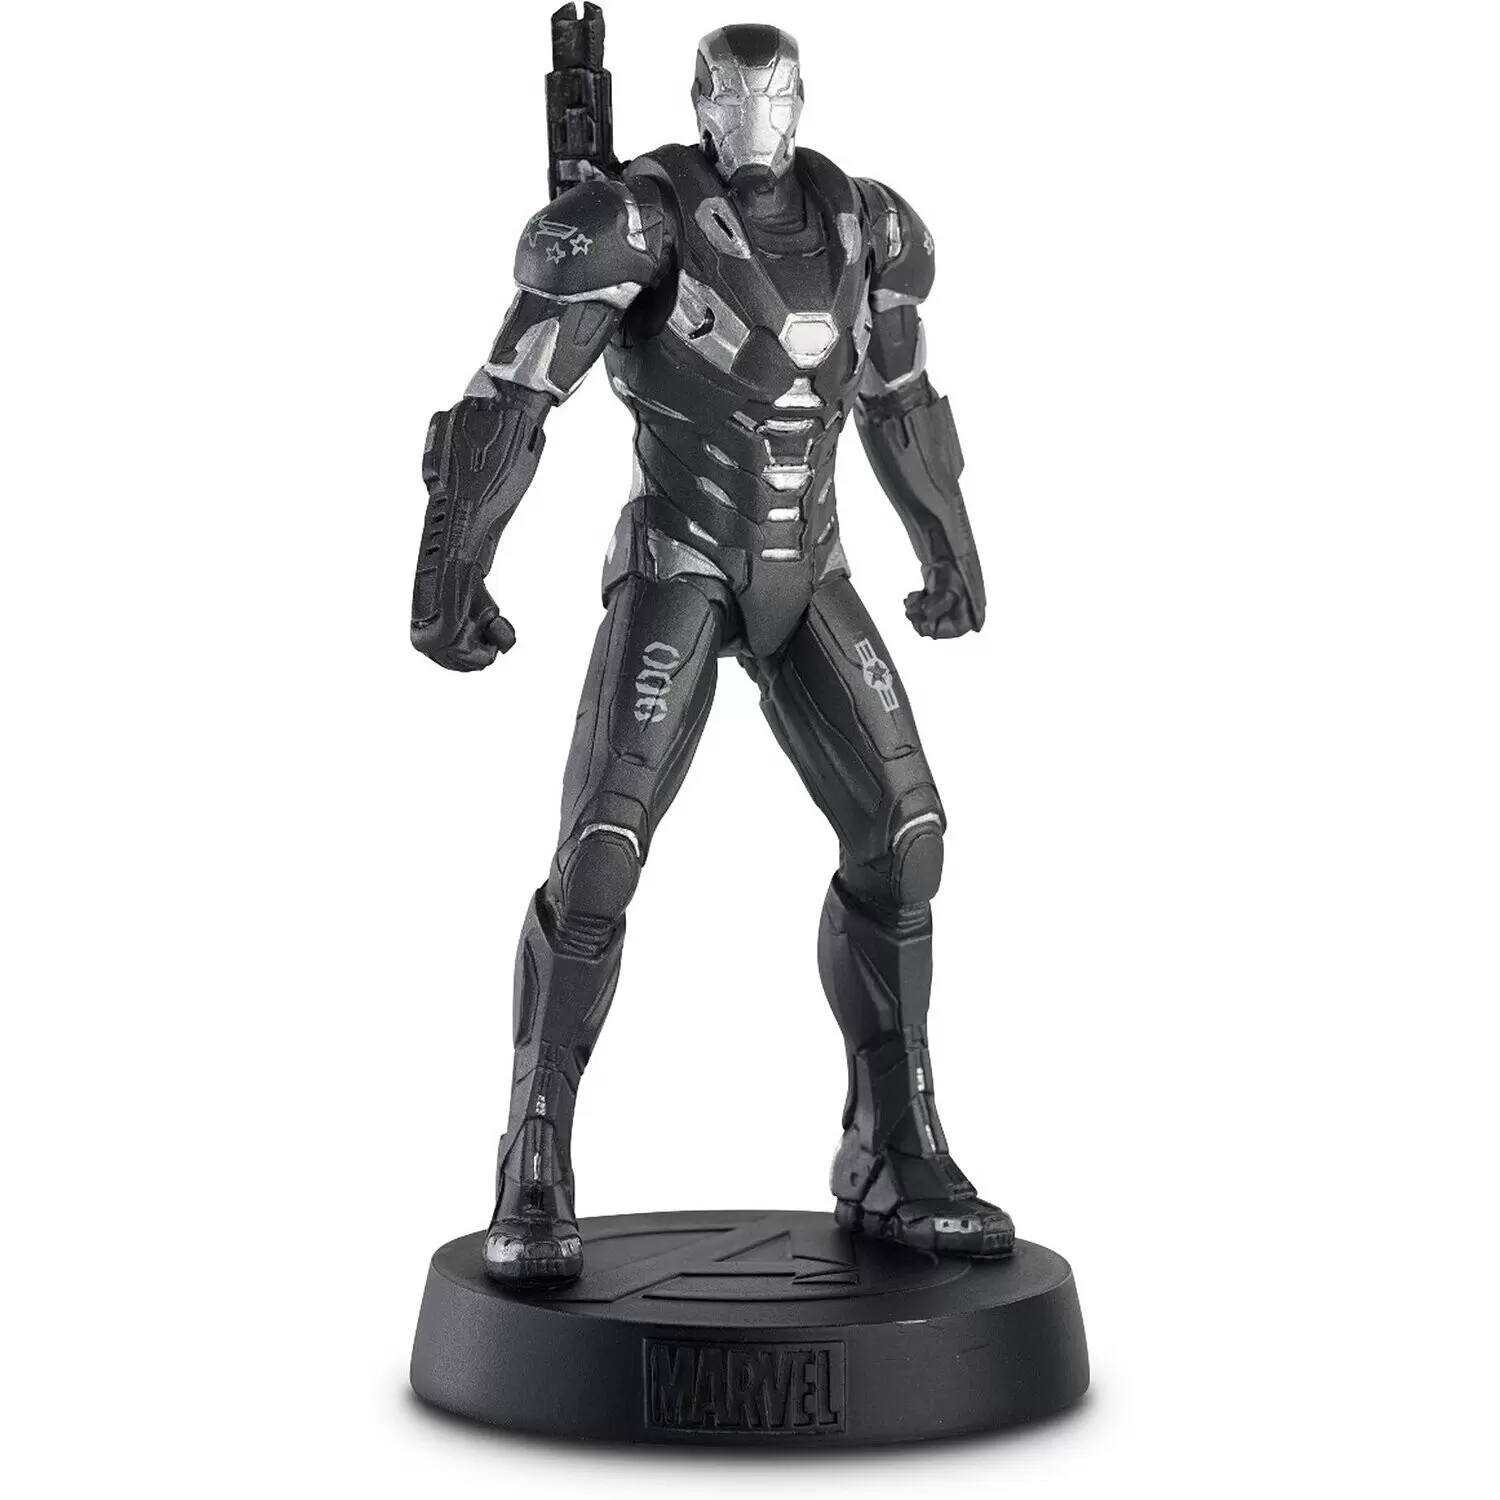 Figurines des films Marvel - War Machine Figurine (Avengers: Endgame)